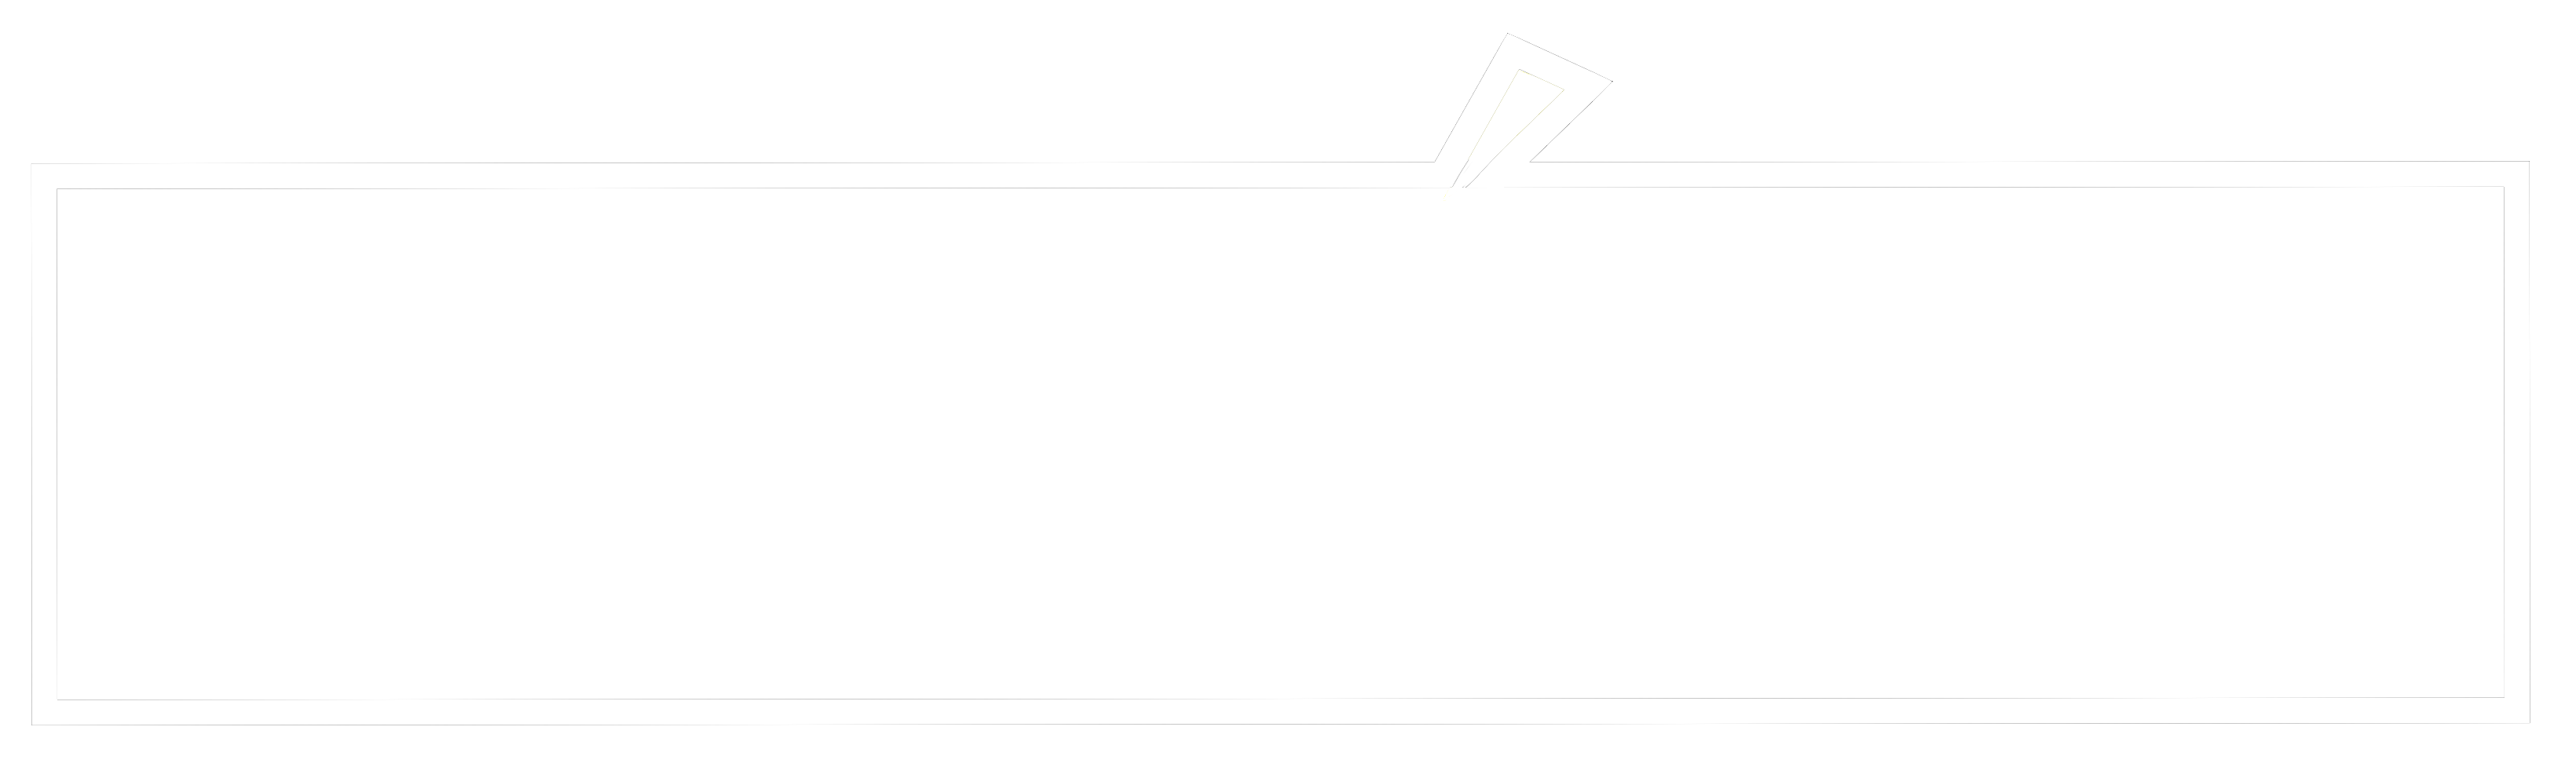 Stecak logo